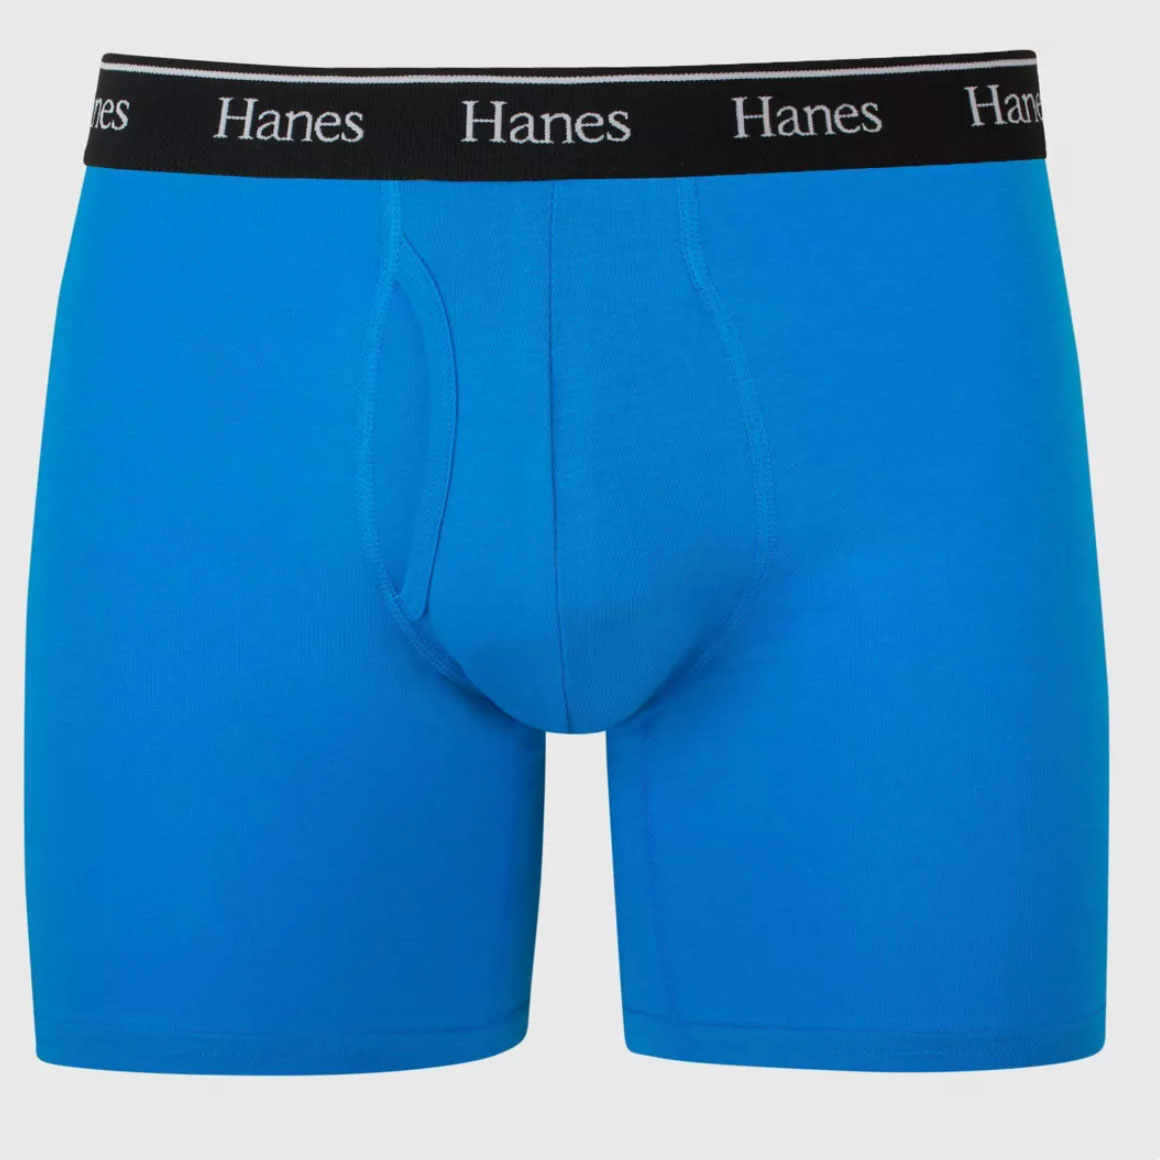 Blue and black Hanes boxer briefs